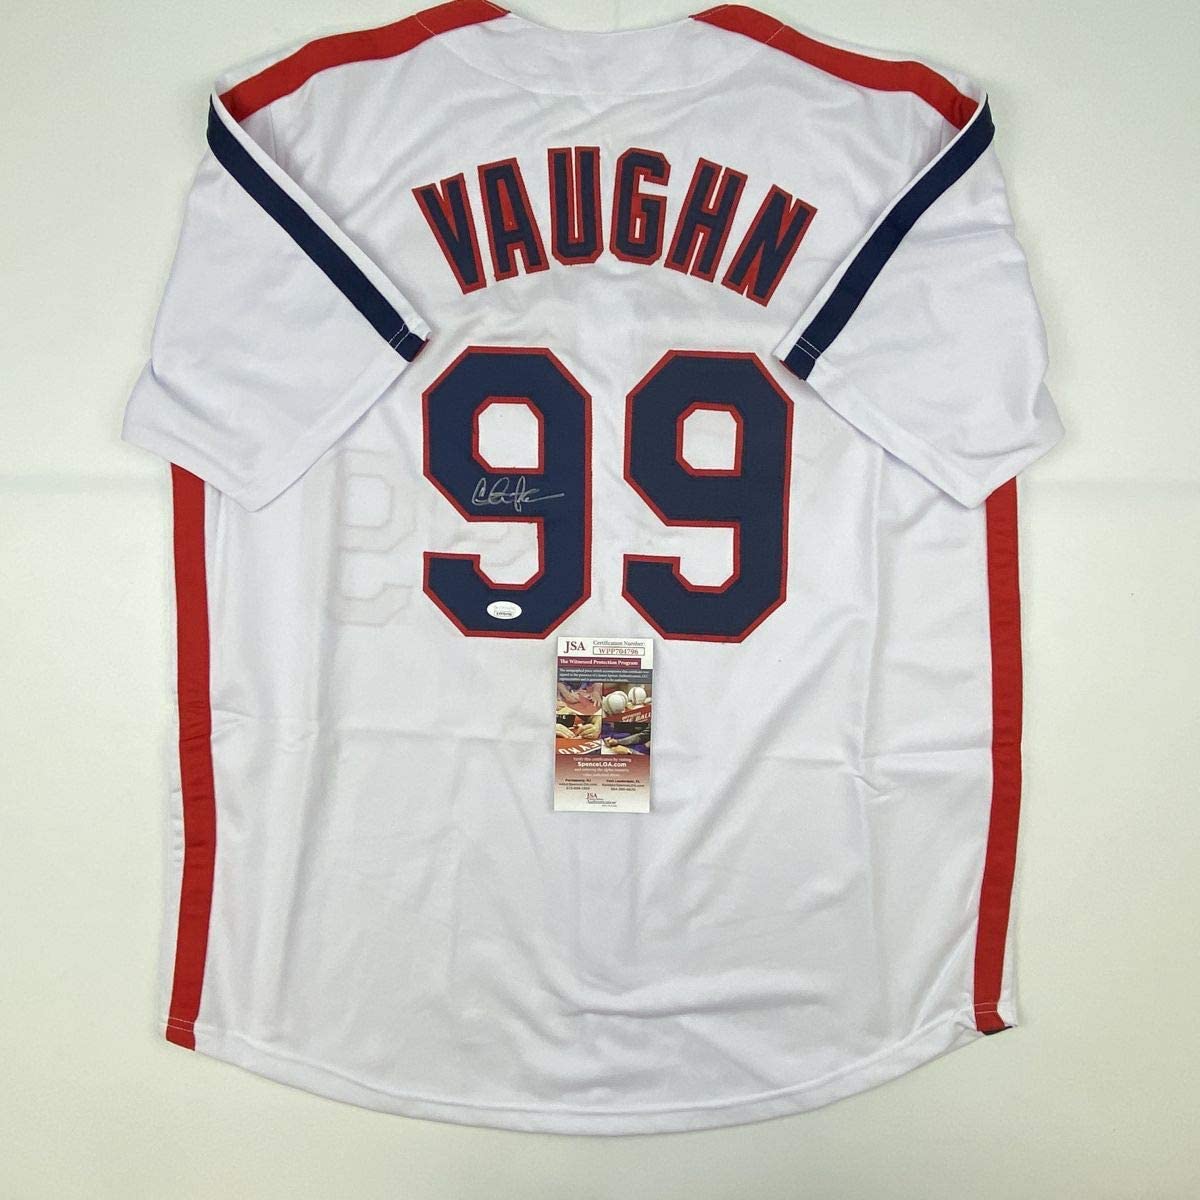 Ricky Vaughn costume (Wild Thing - Major League)